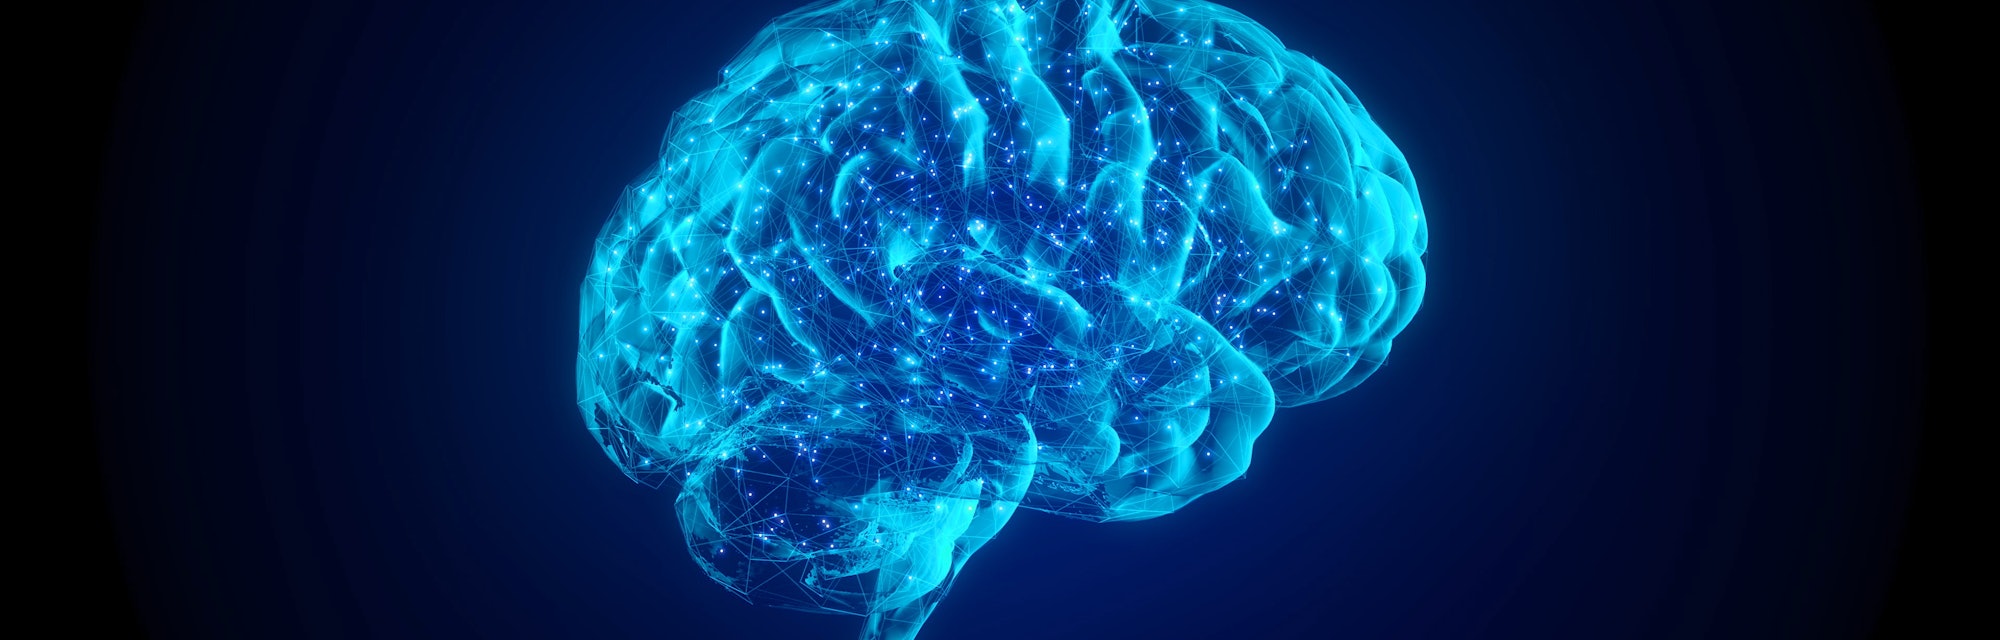 4k 3fps AI Brain Concept. Artificial Intelligence, neuronets. 360 rotating. futuristic hologram of b...